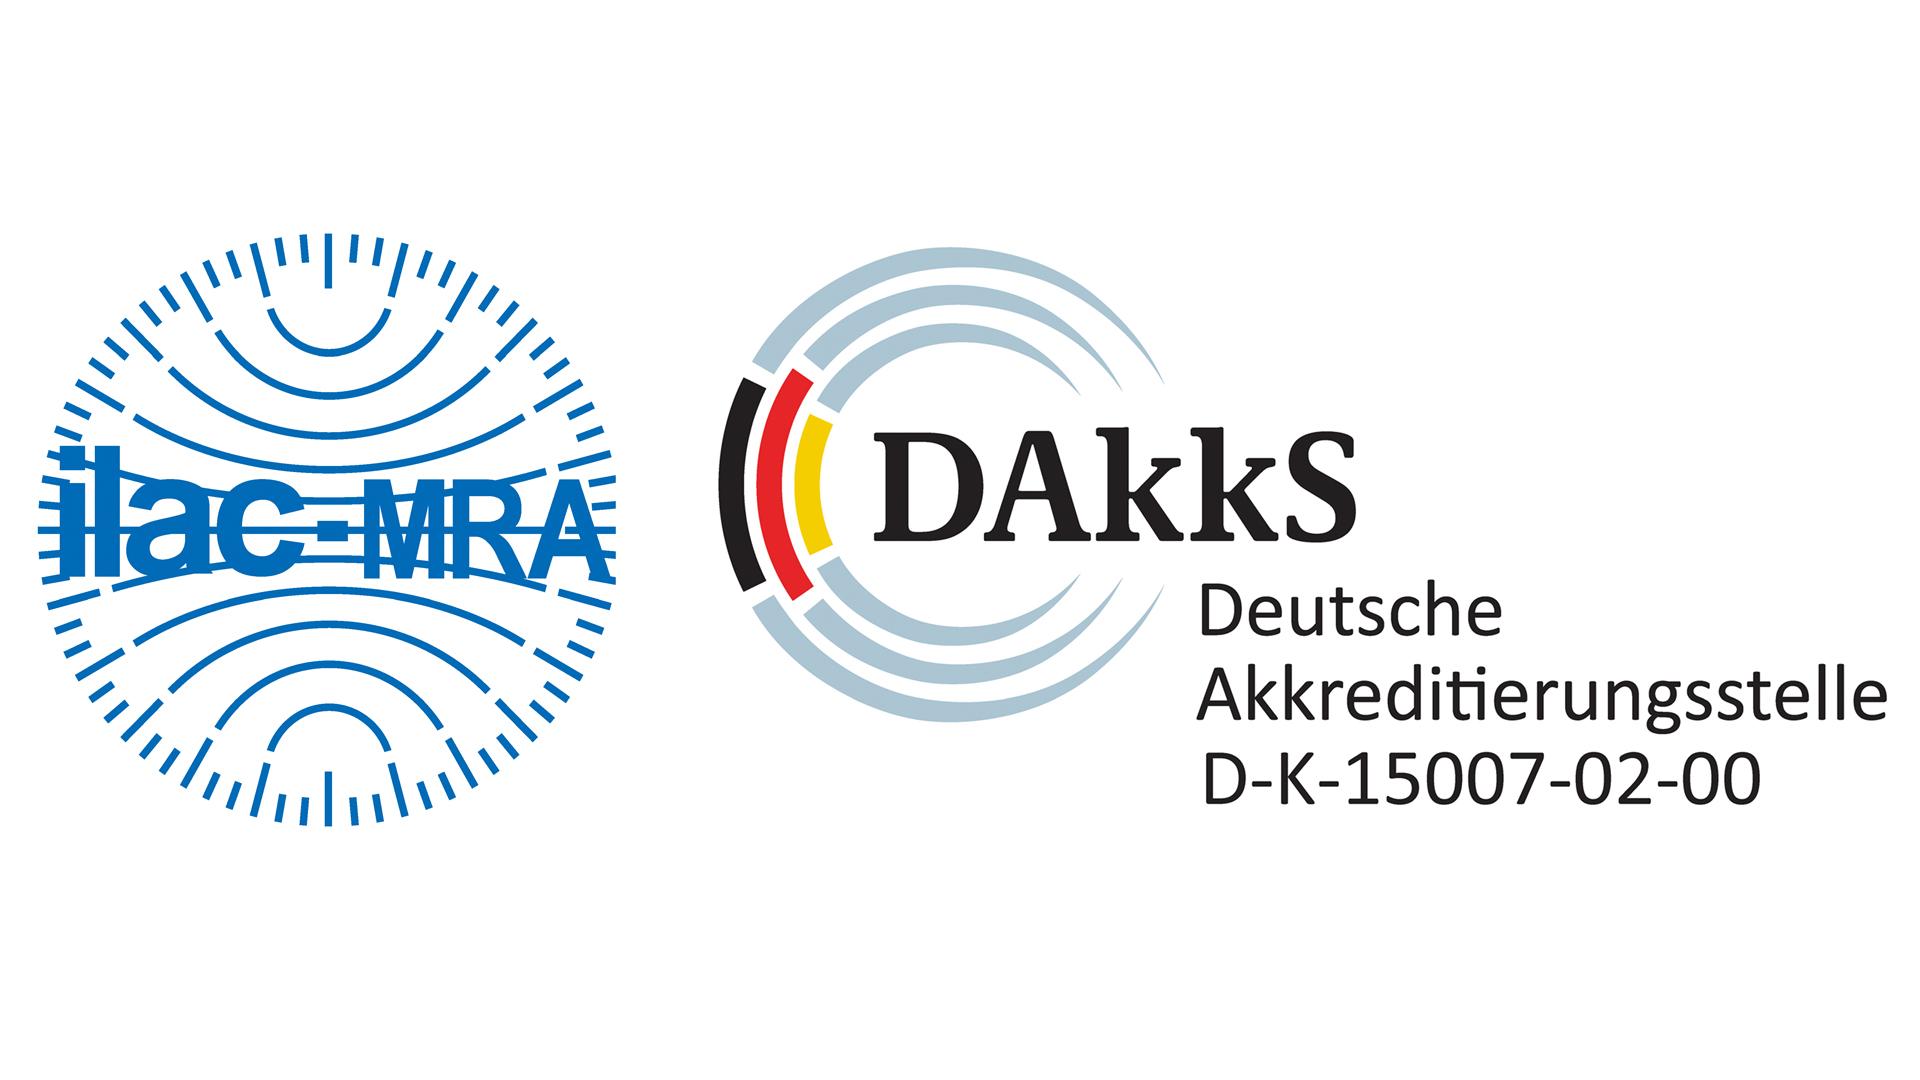 DAkks accreditation